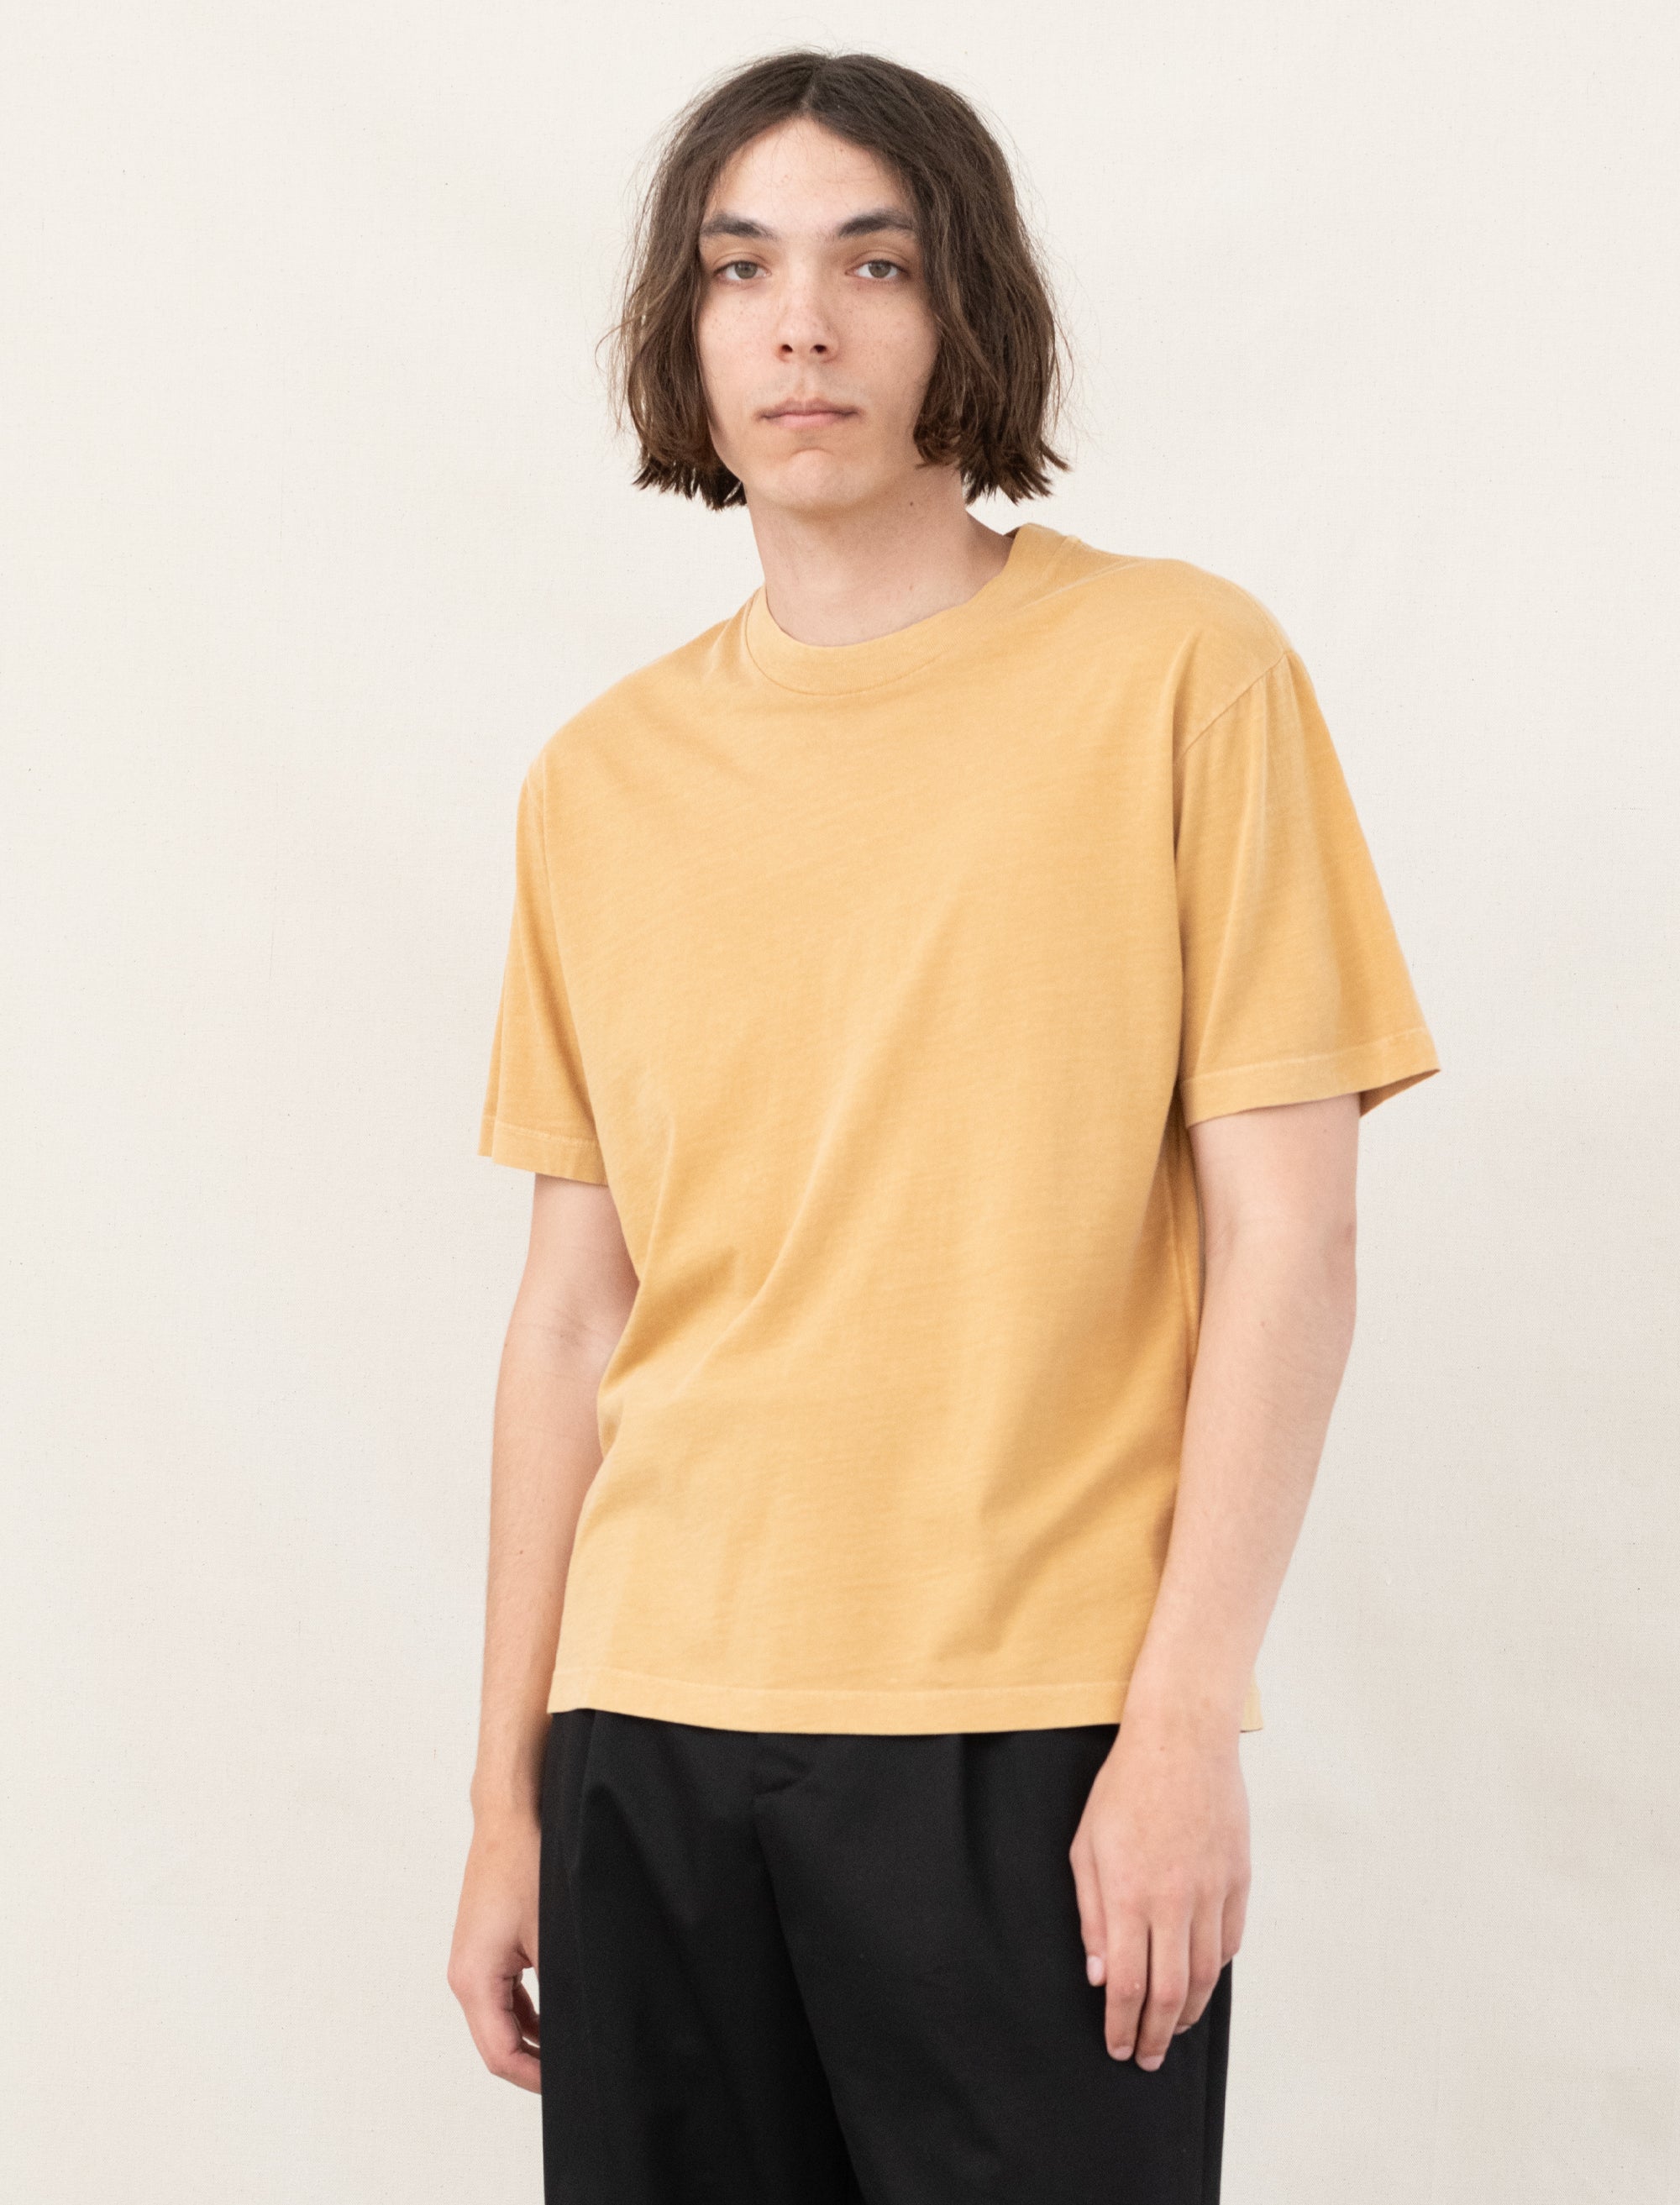 Athens T-Shirt (Mustard Pigment)